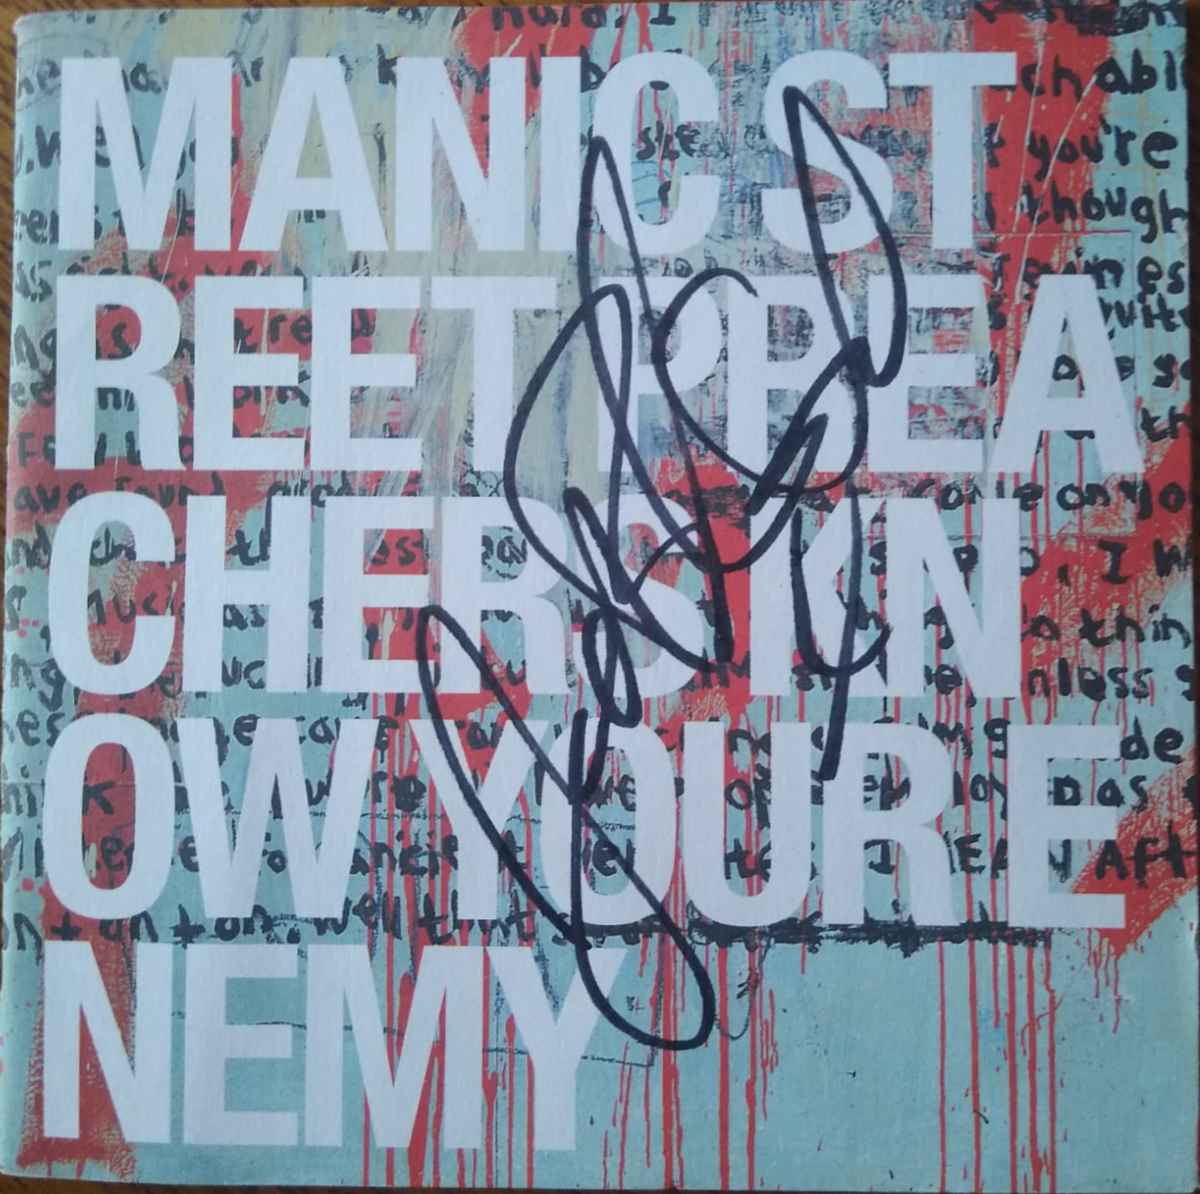 Manic Street Preachers signed LP cover